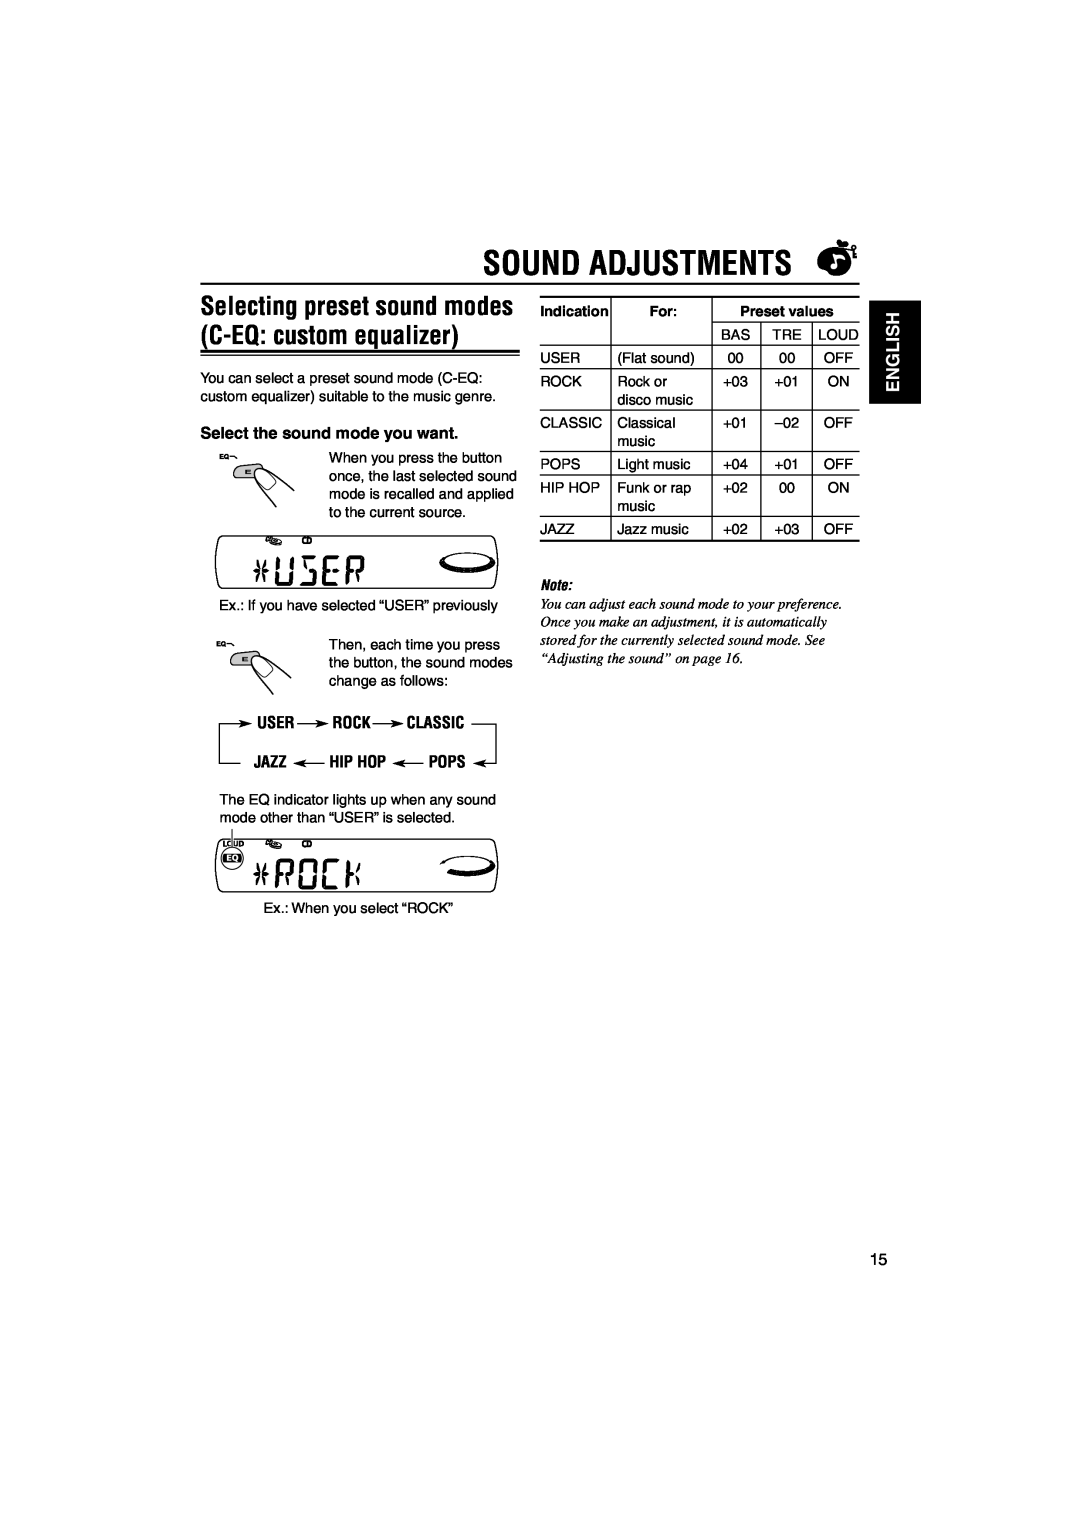 JVC KD-SX695, KD-SX745 Sound Adjustments, English, Select the sound mode you want, User Rock Classic Jazz Hip Hop Pops 